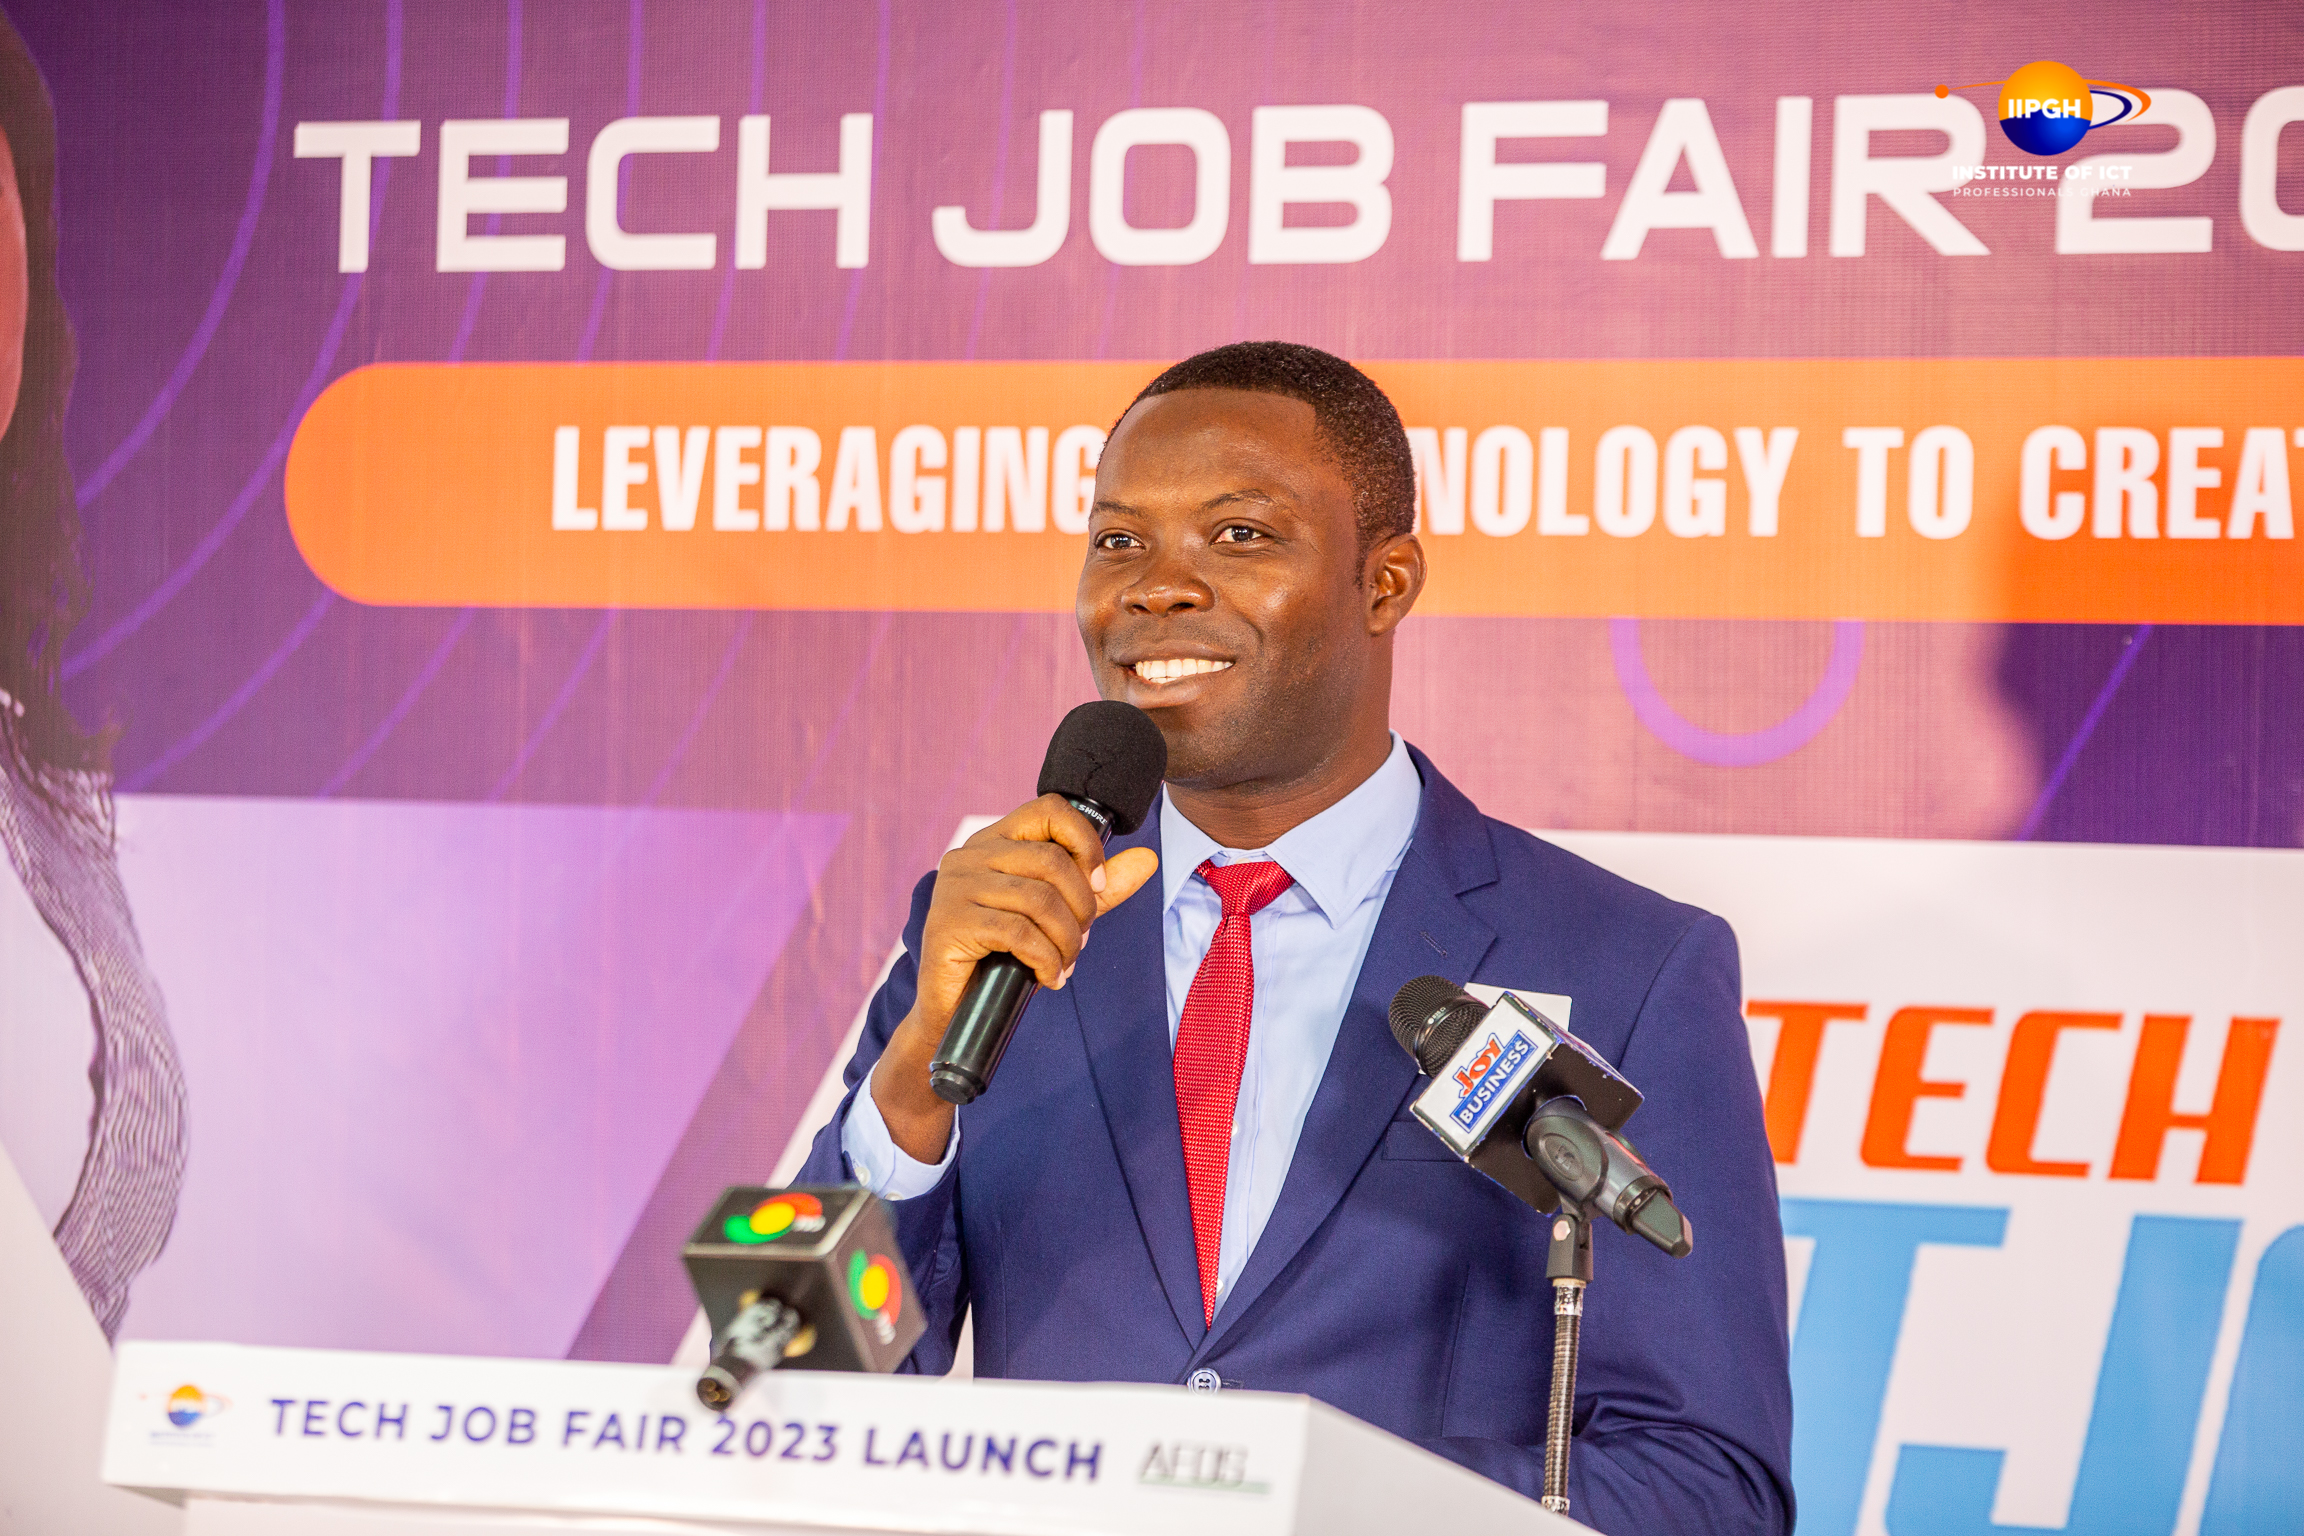 IIPGH, AFOS Foundation and partners launch Tech Job Fair 2023